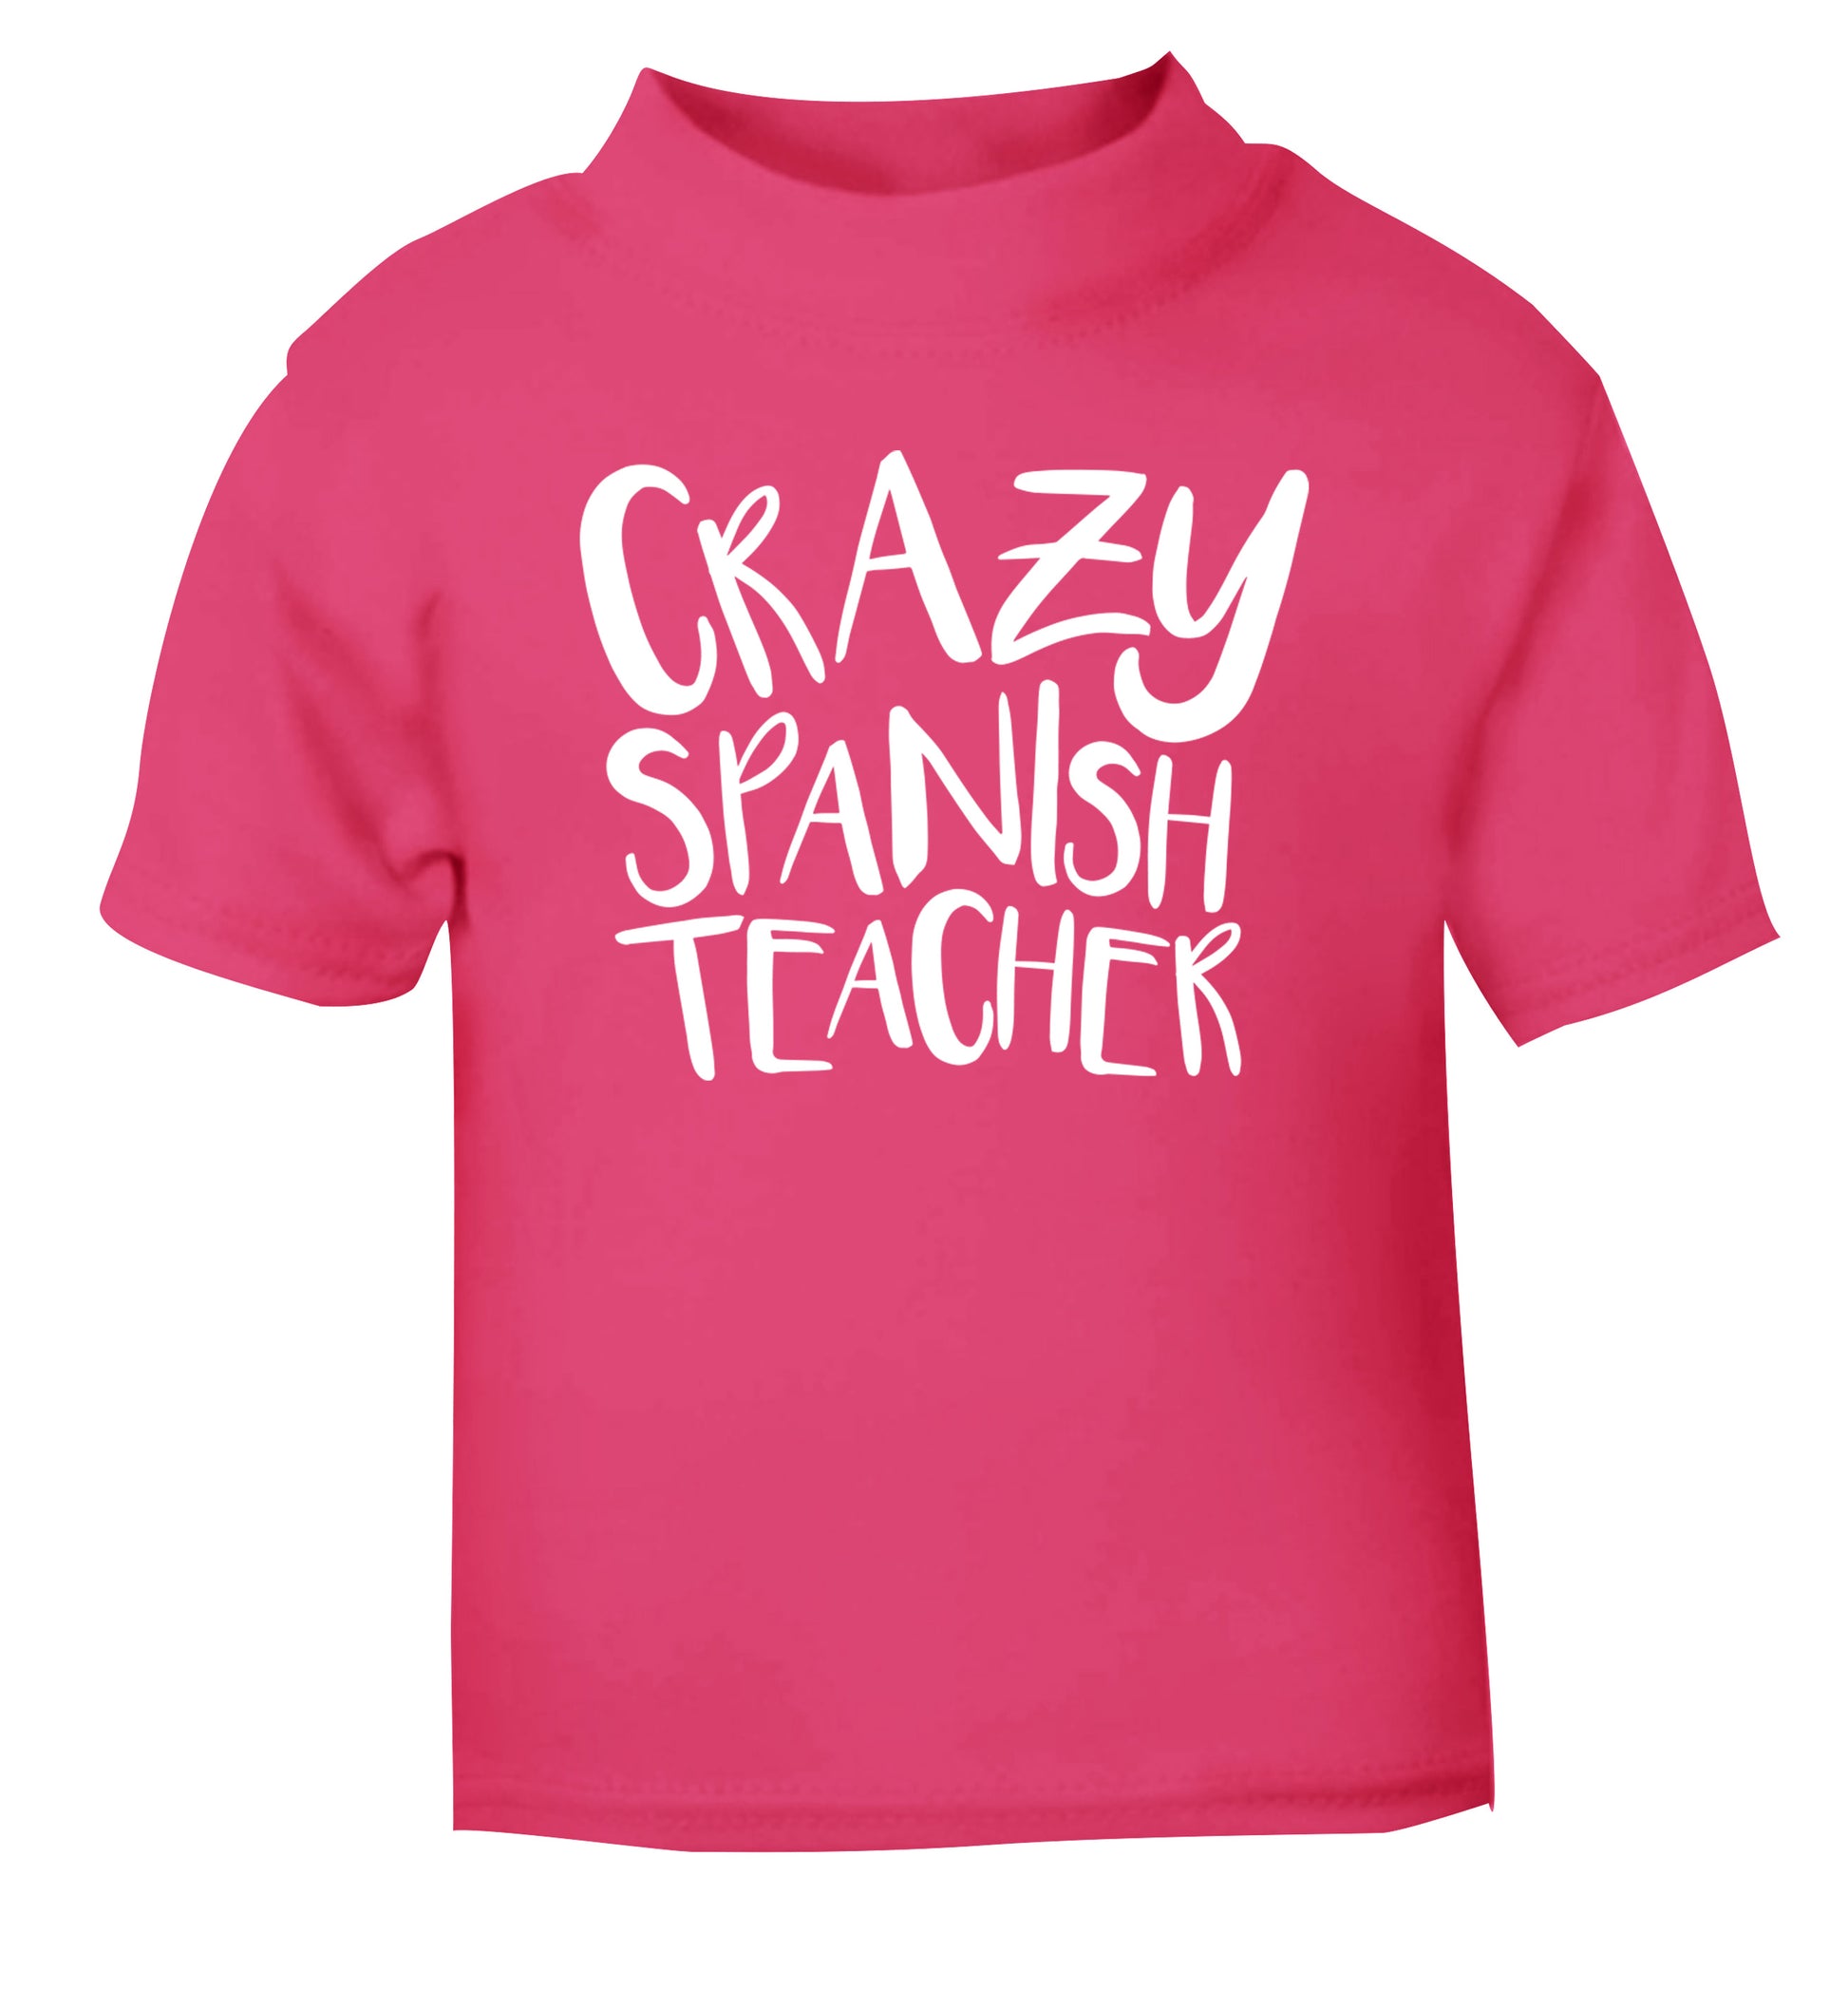 Crazy spanish teacher pink Baby Toddler Tshirt 2 Years